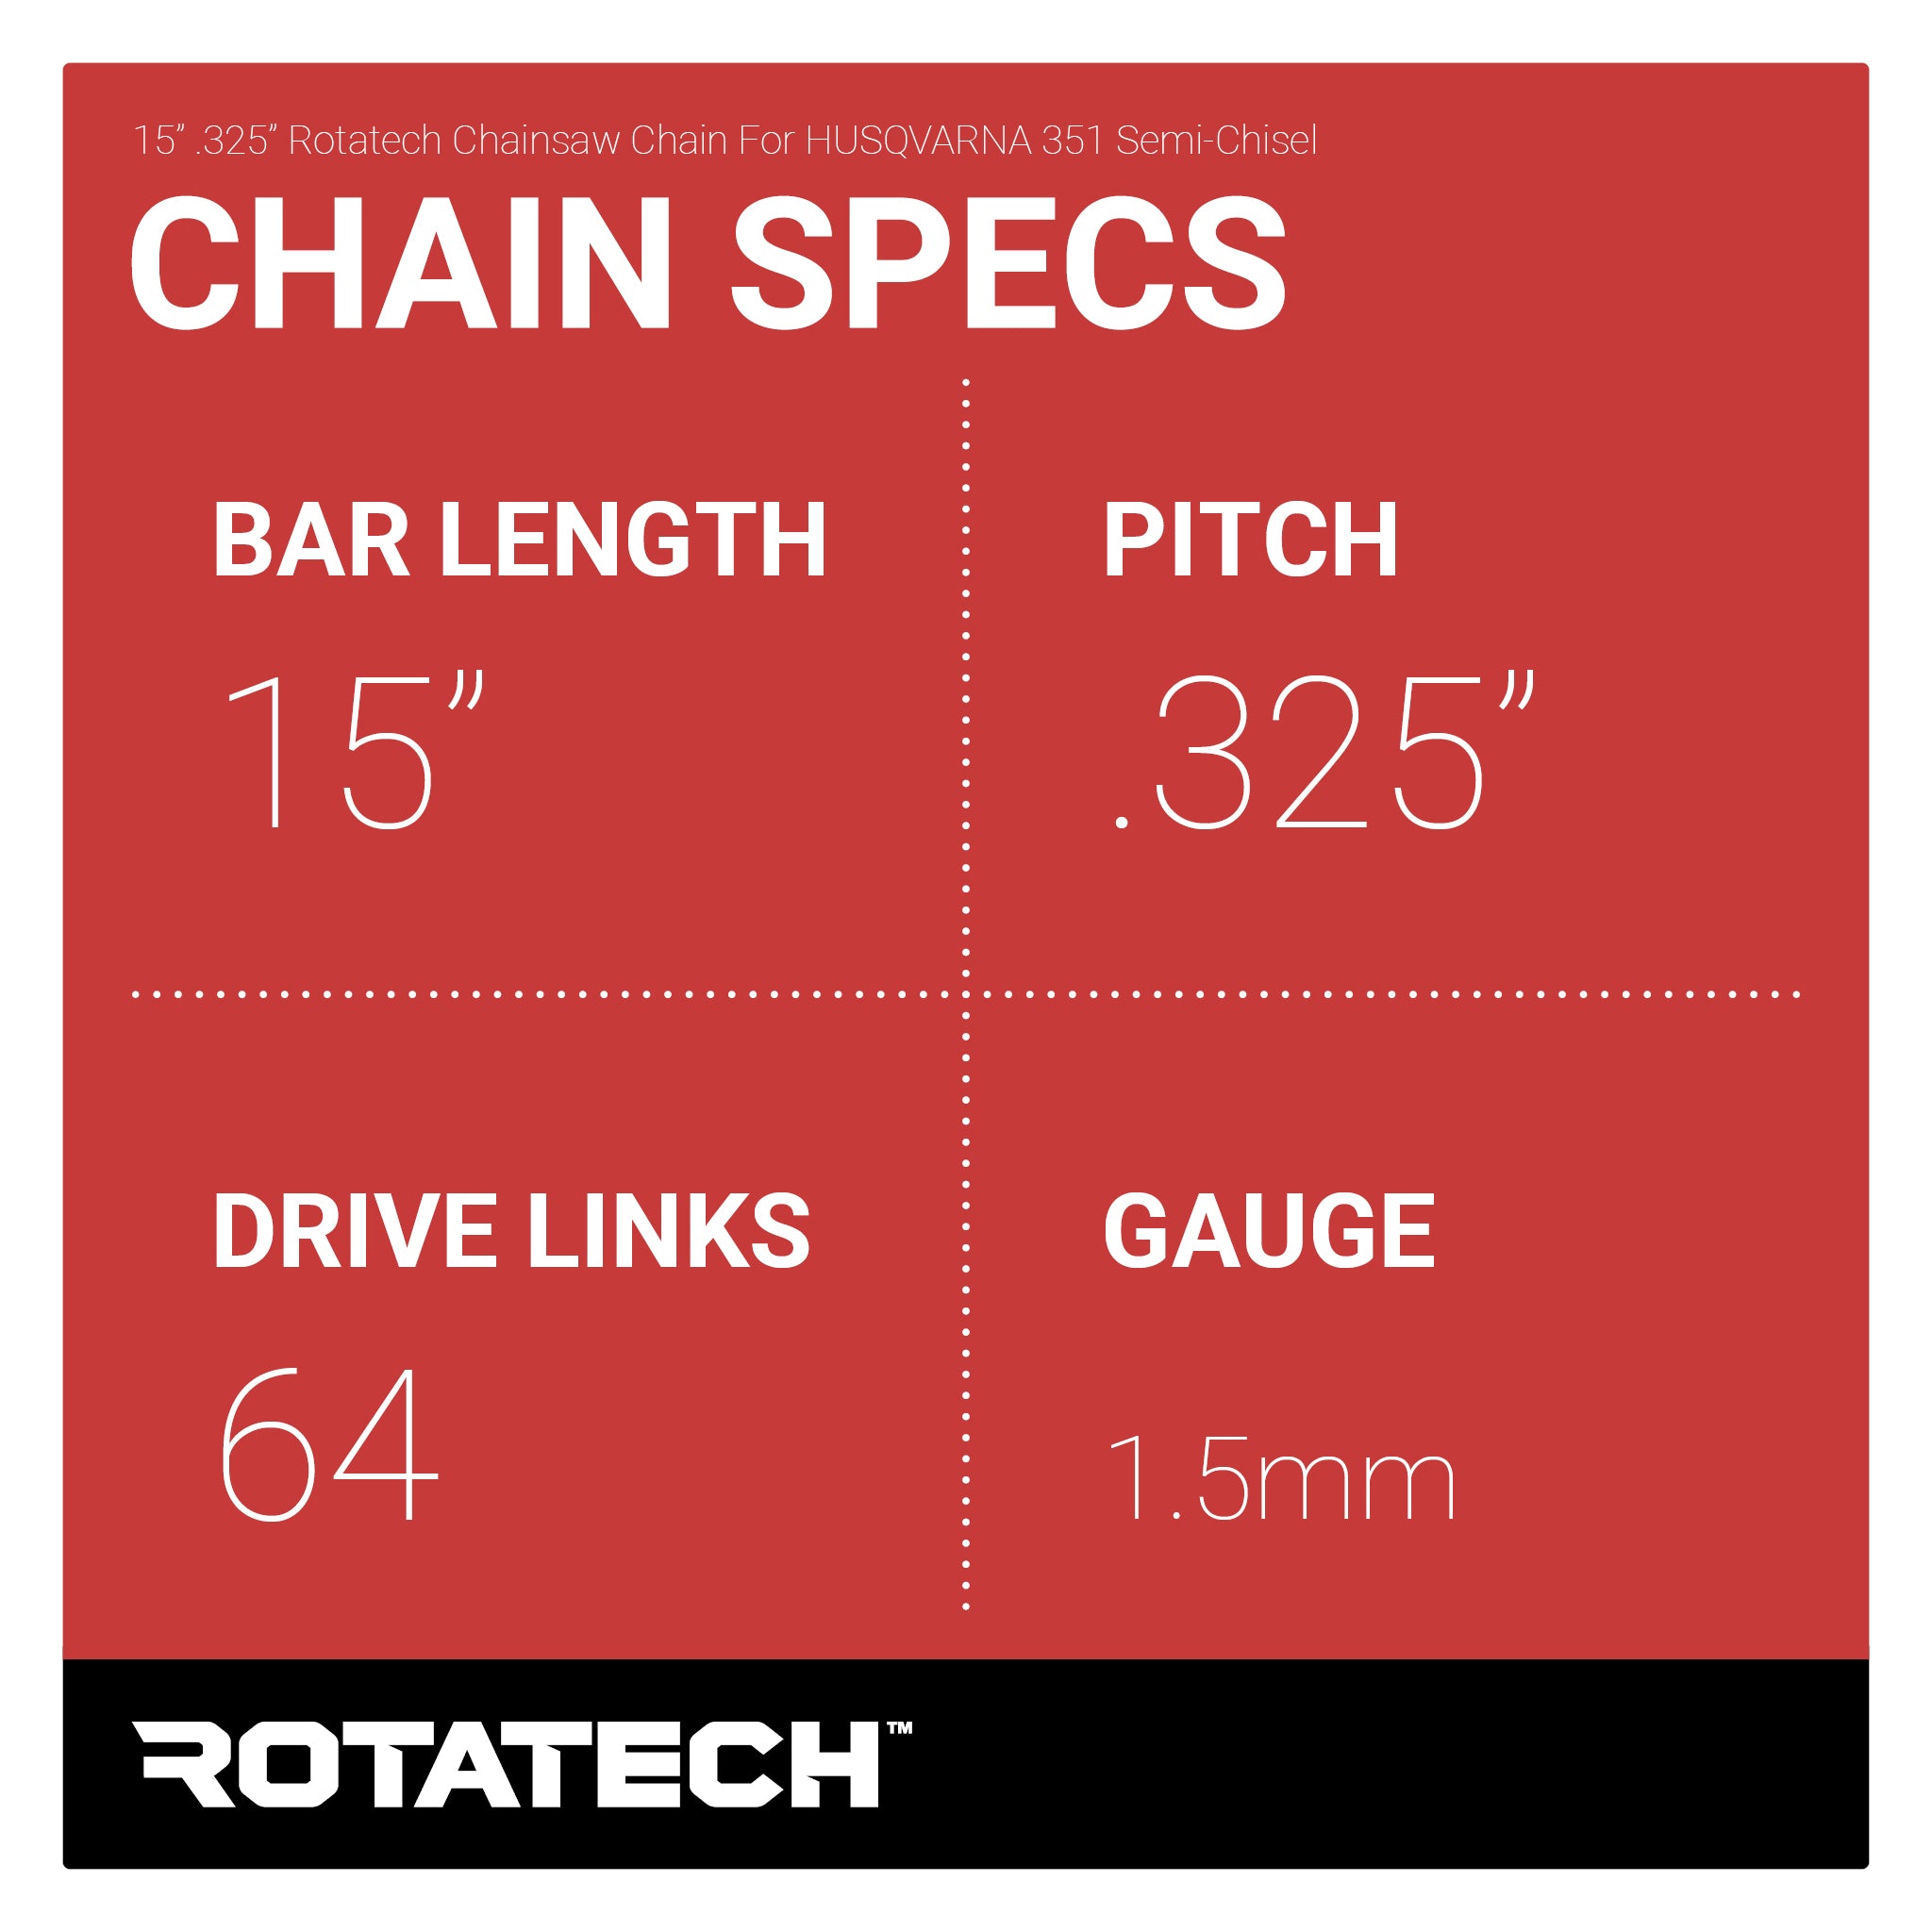 15" .325" Rotatech Chainsaw Chain For HUSQVARNA 351 Semi-Chisel Chain Specs